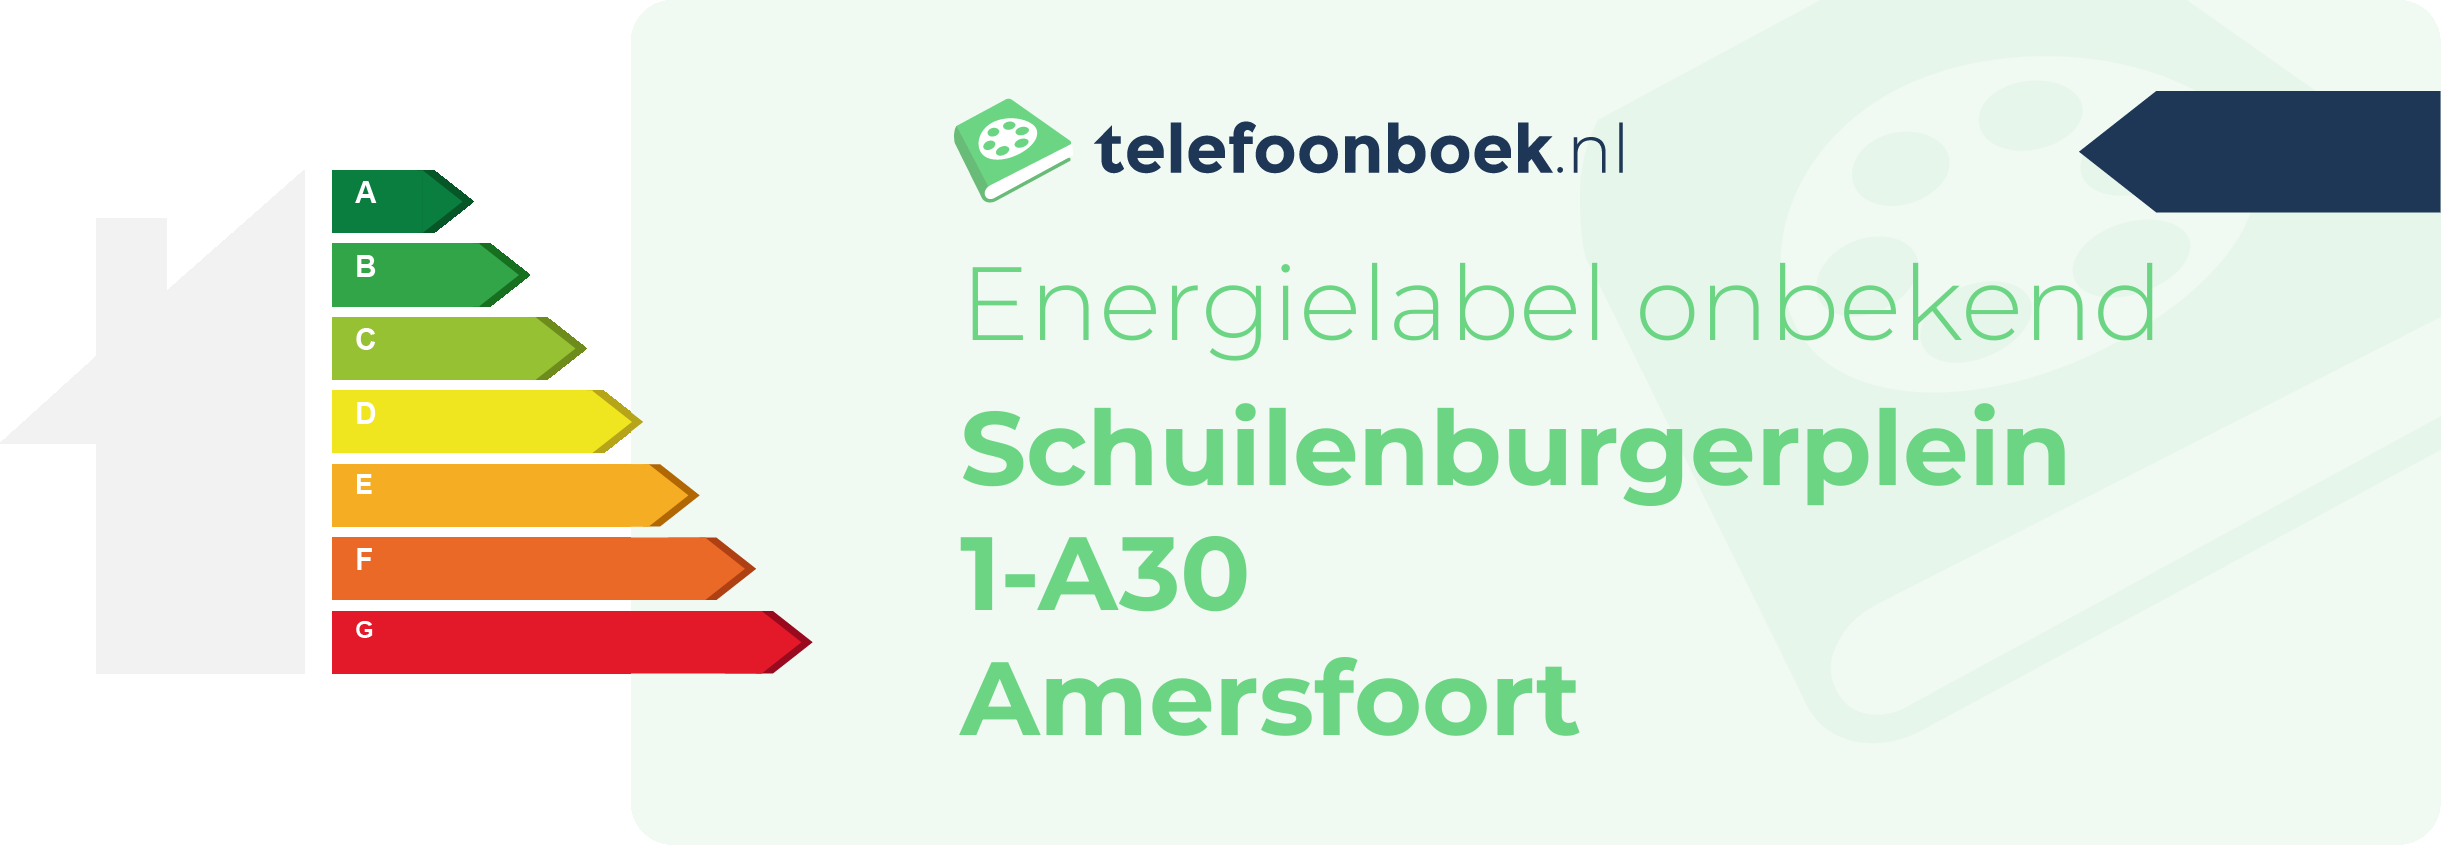 Energielabel Schuilenburgerplein 1-A30 Amersfoort